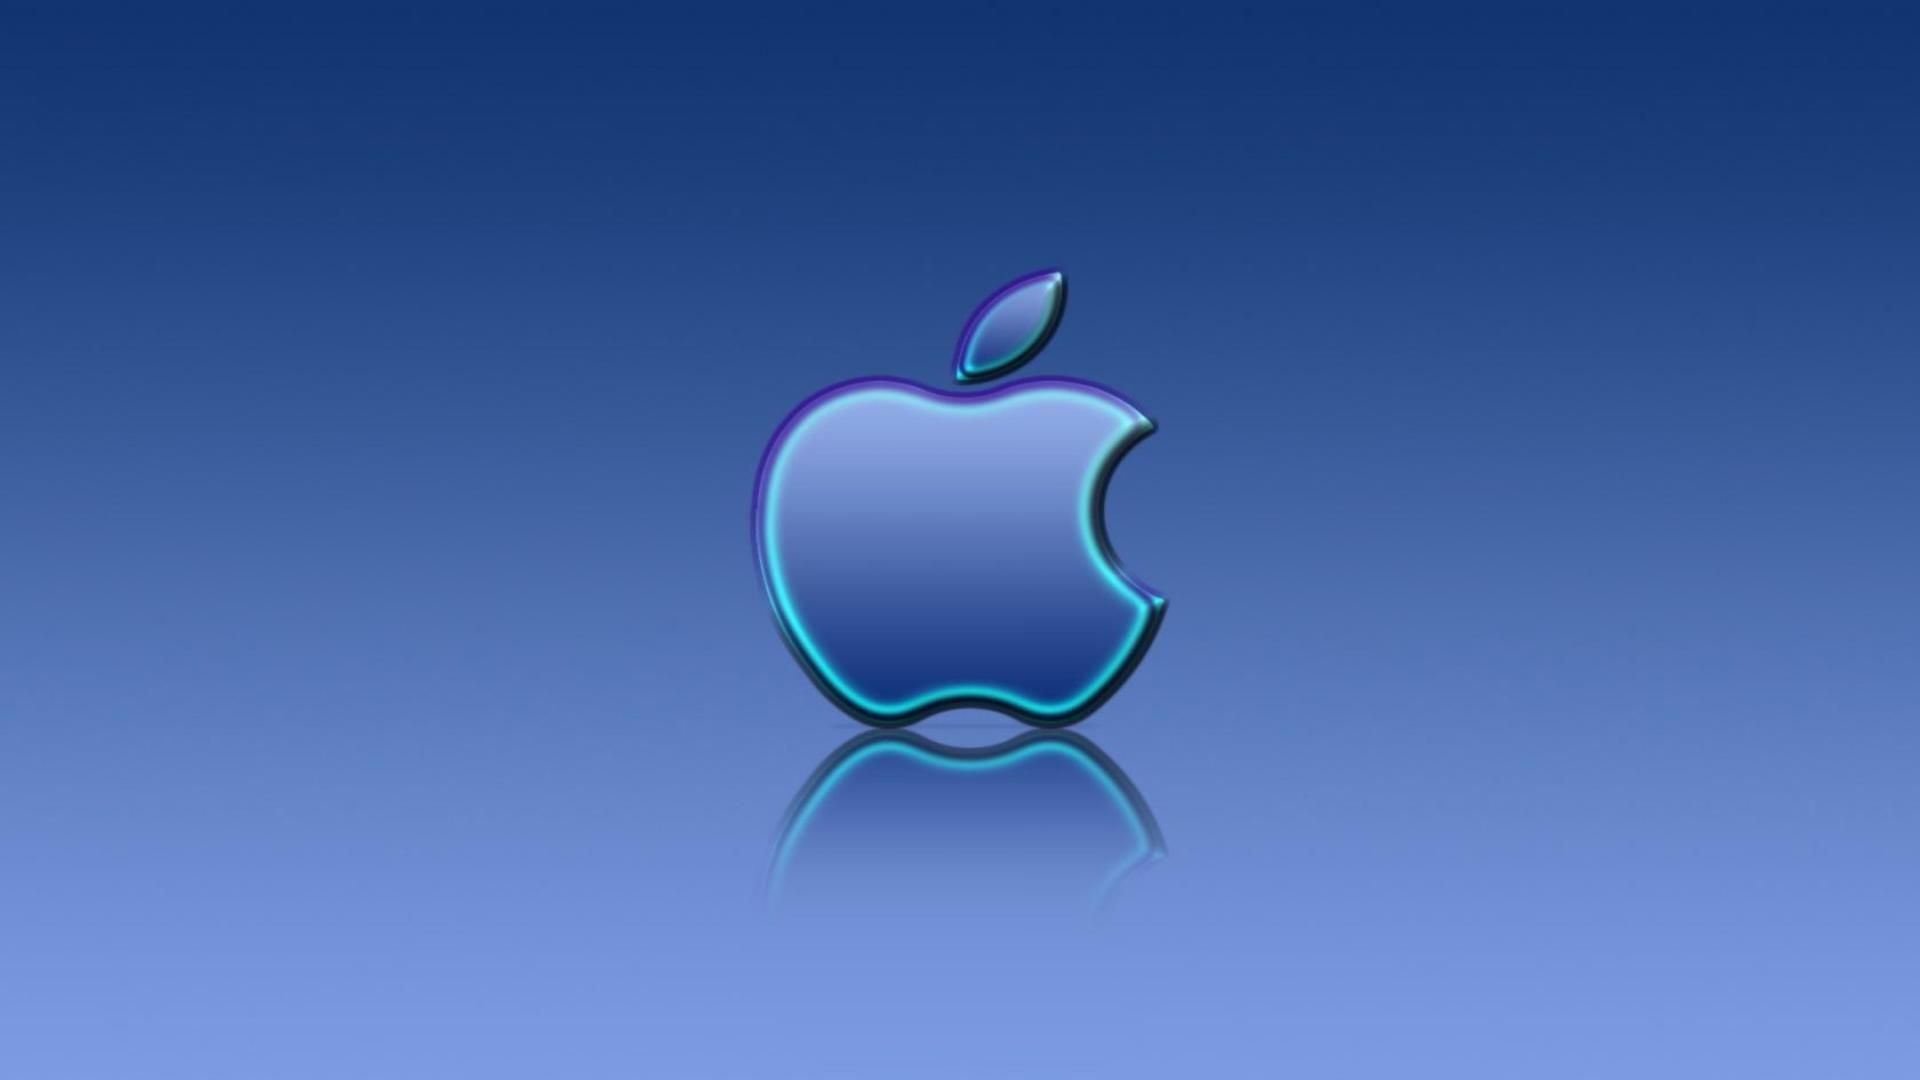 Apple glass mac logo free desktop background wallpaper image